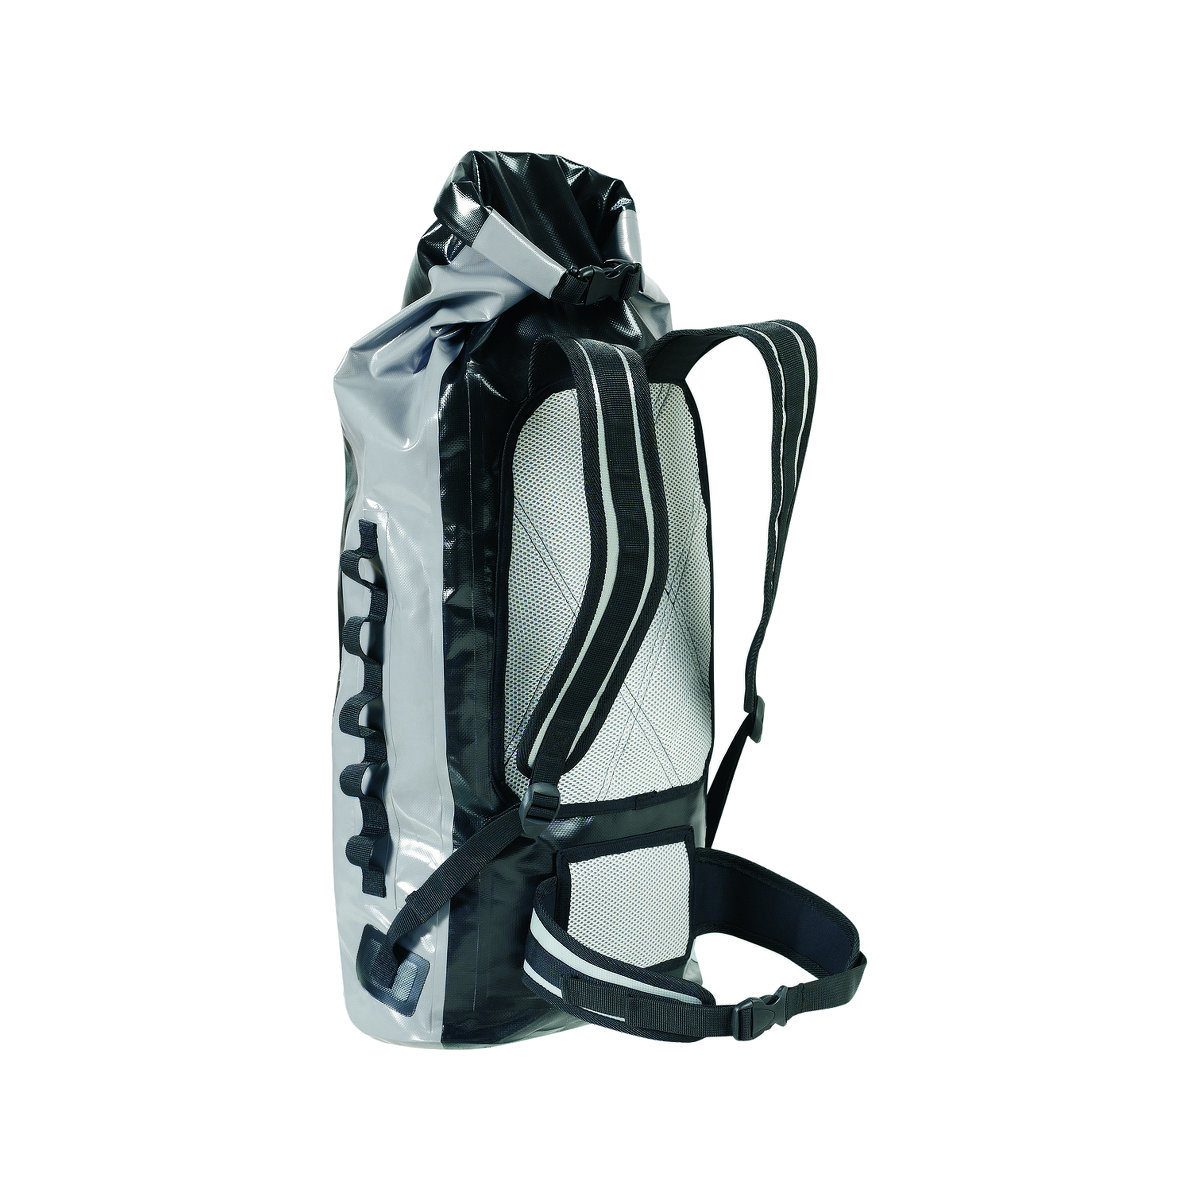 Marinepool Drybag 8 sac à dos étanche - noir/gris, 62 L